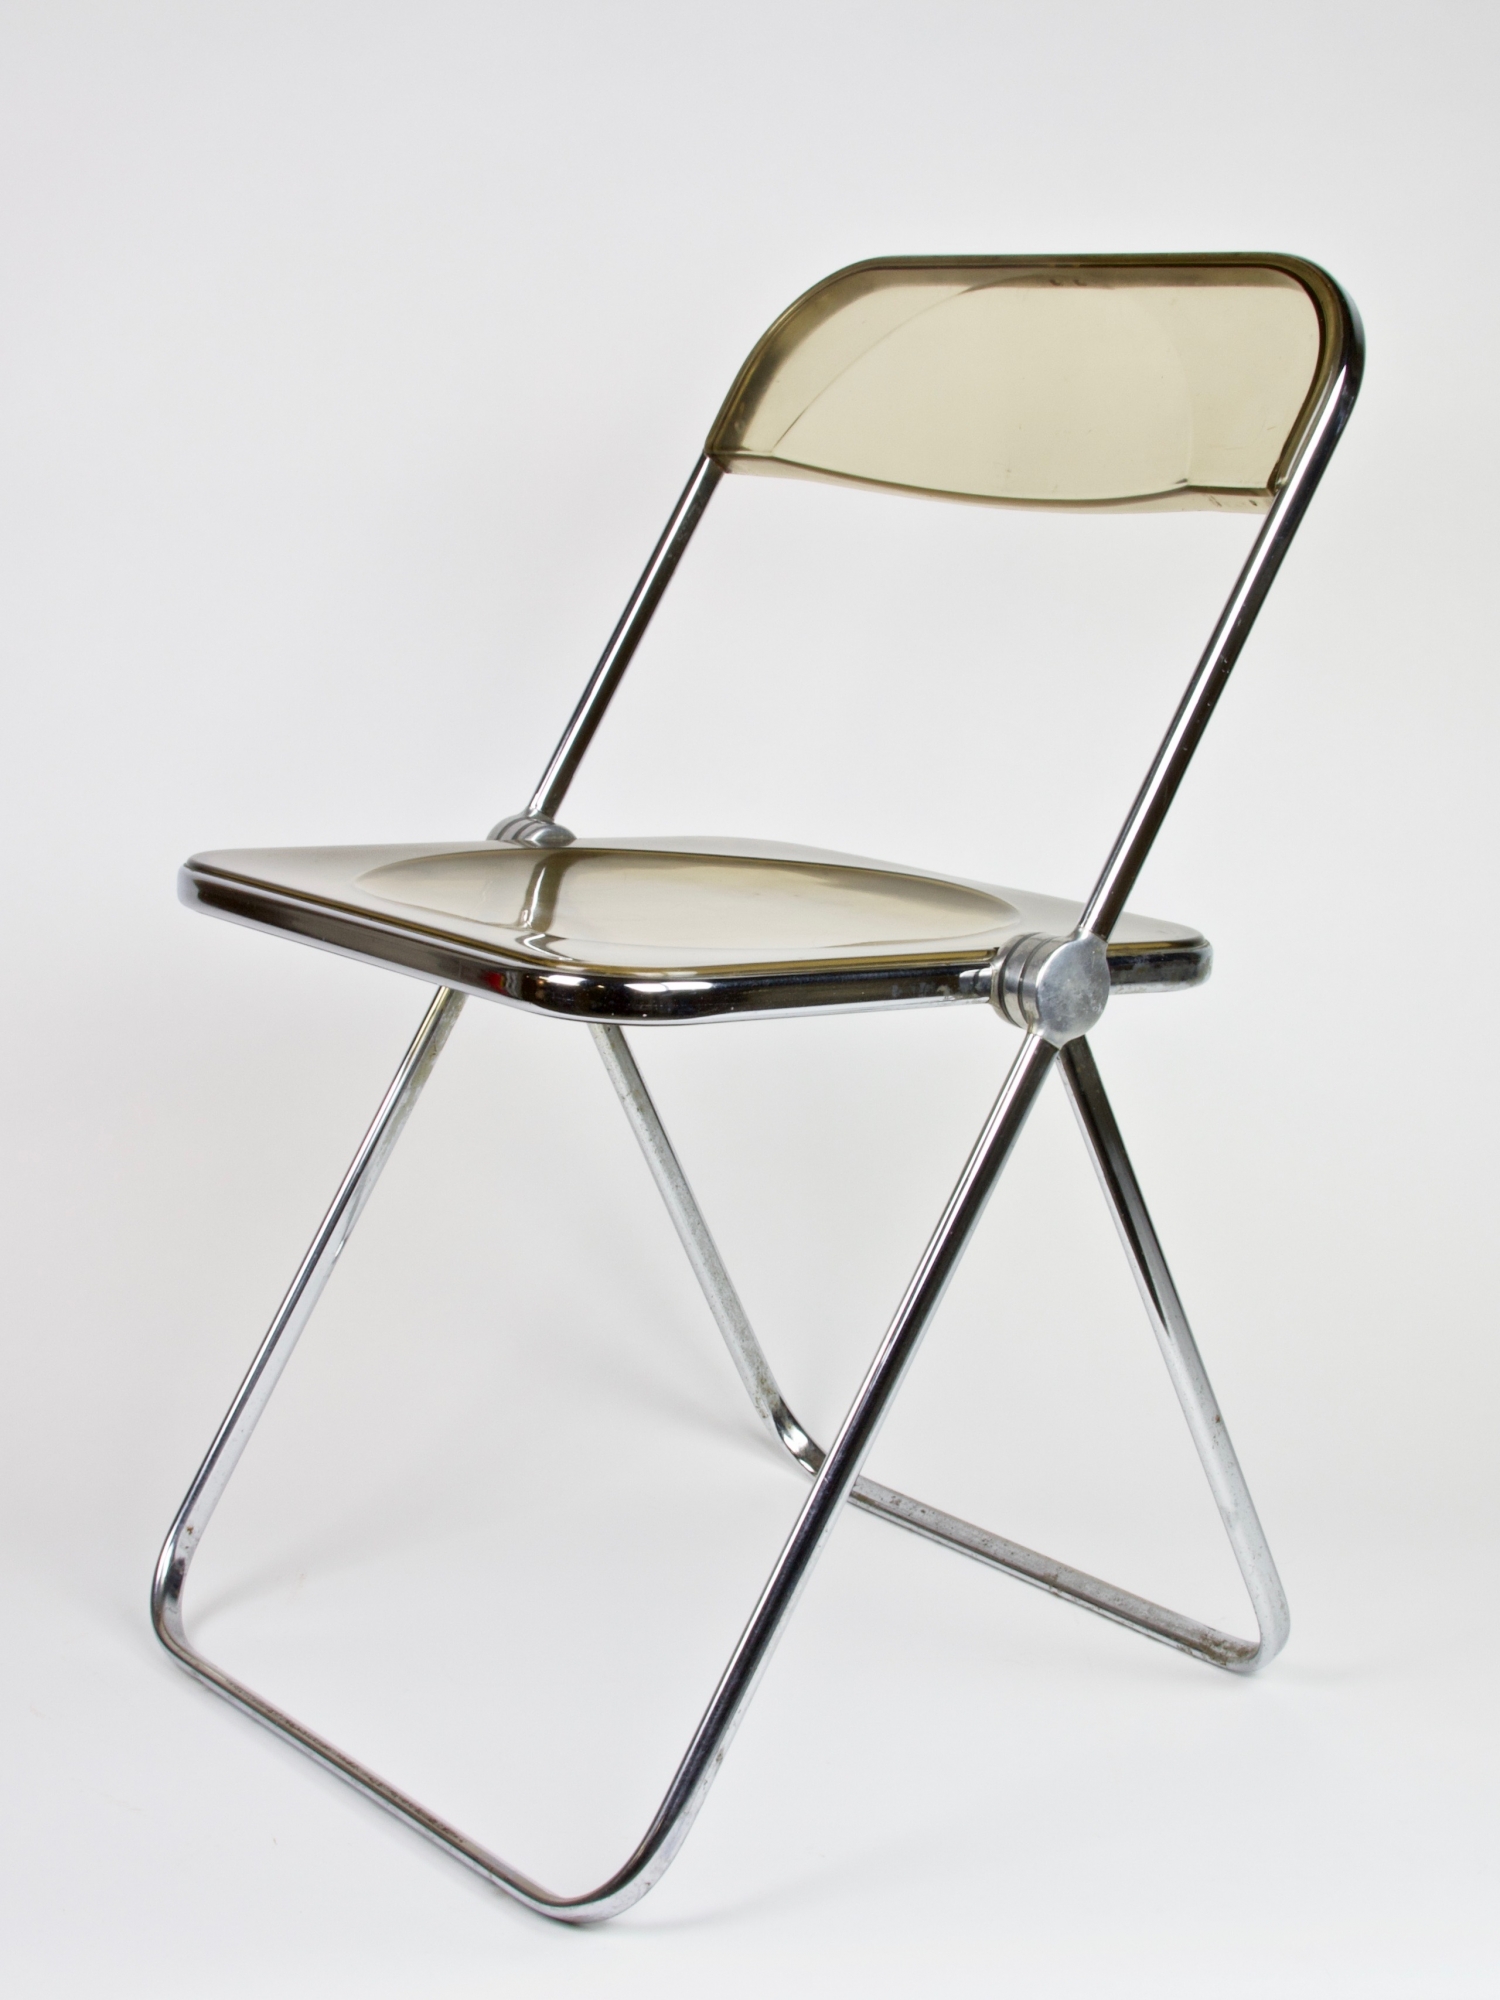 College Ontstaan Intiem Giancarlo Piretti voor Castelli, Twee inklapbare 'Plia' stoelen, 1967 -  Giancarlo Piretti | Kunstconsult